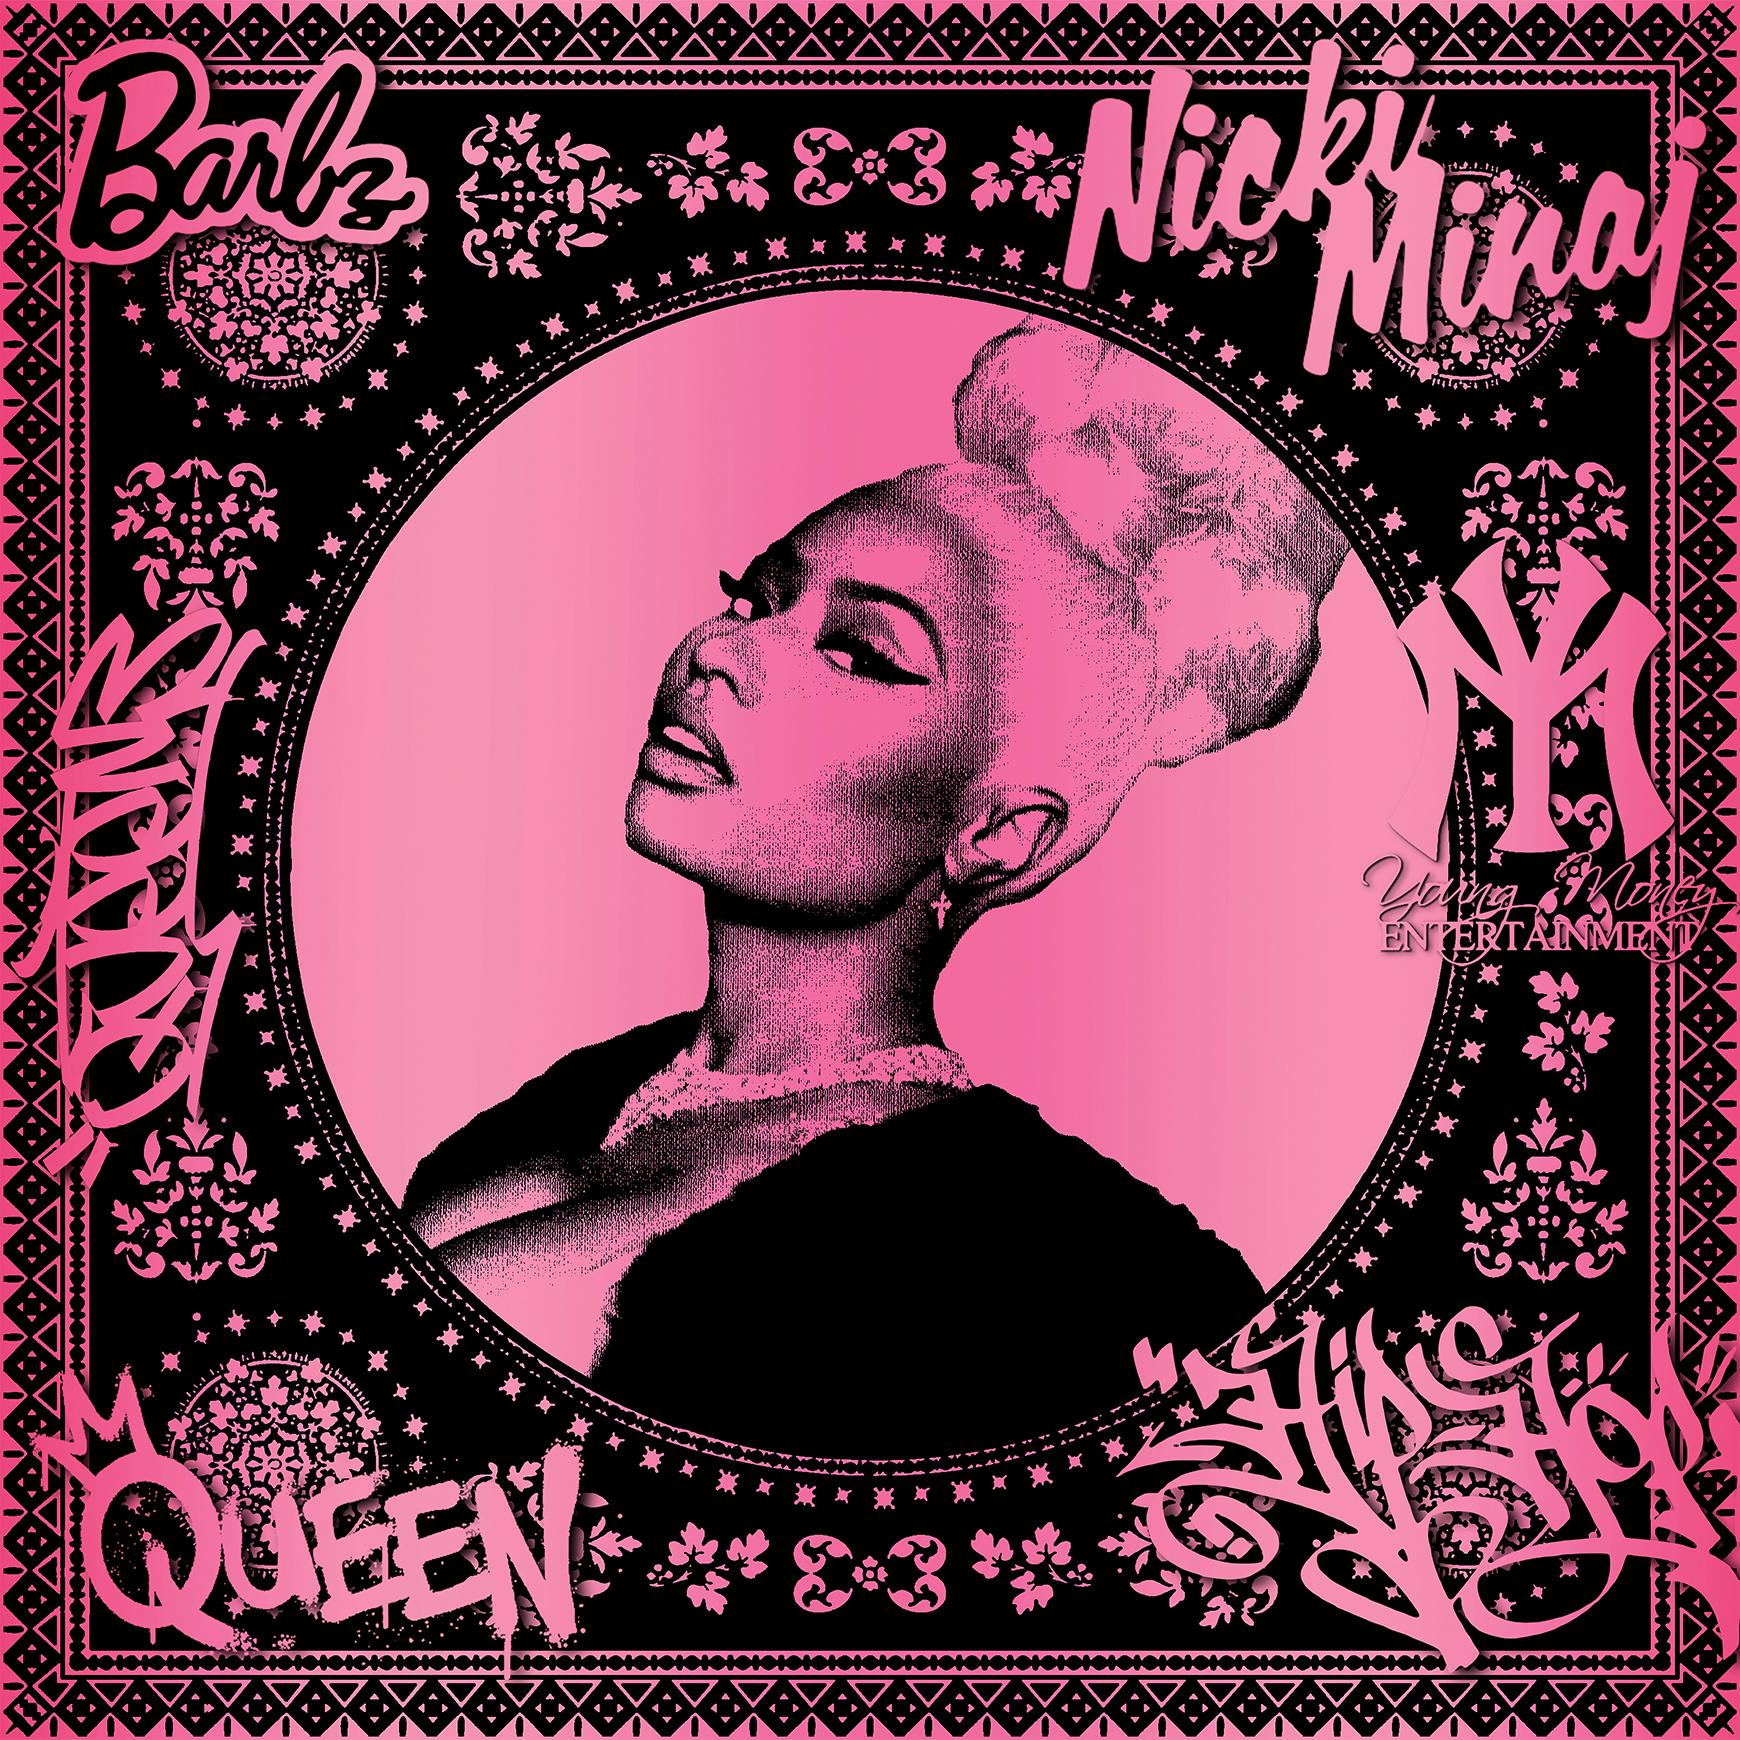 Nicki Minaj (Pink) (50 Years, Hip Hop, Rap, Iconic, Artist, Musician, Rapper) - Print by Agent X